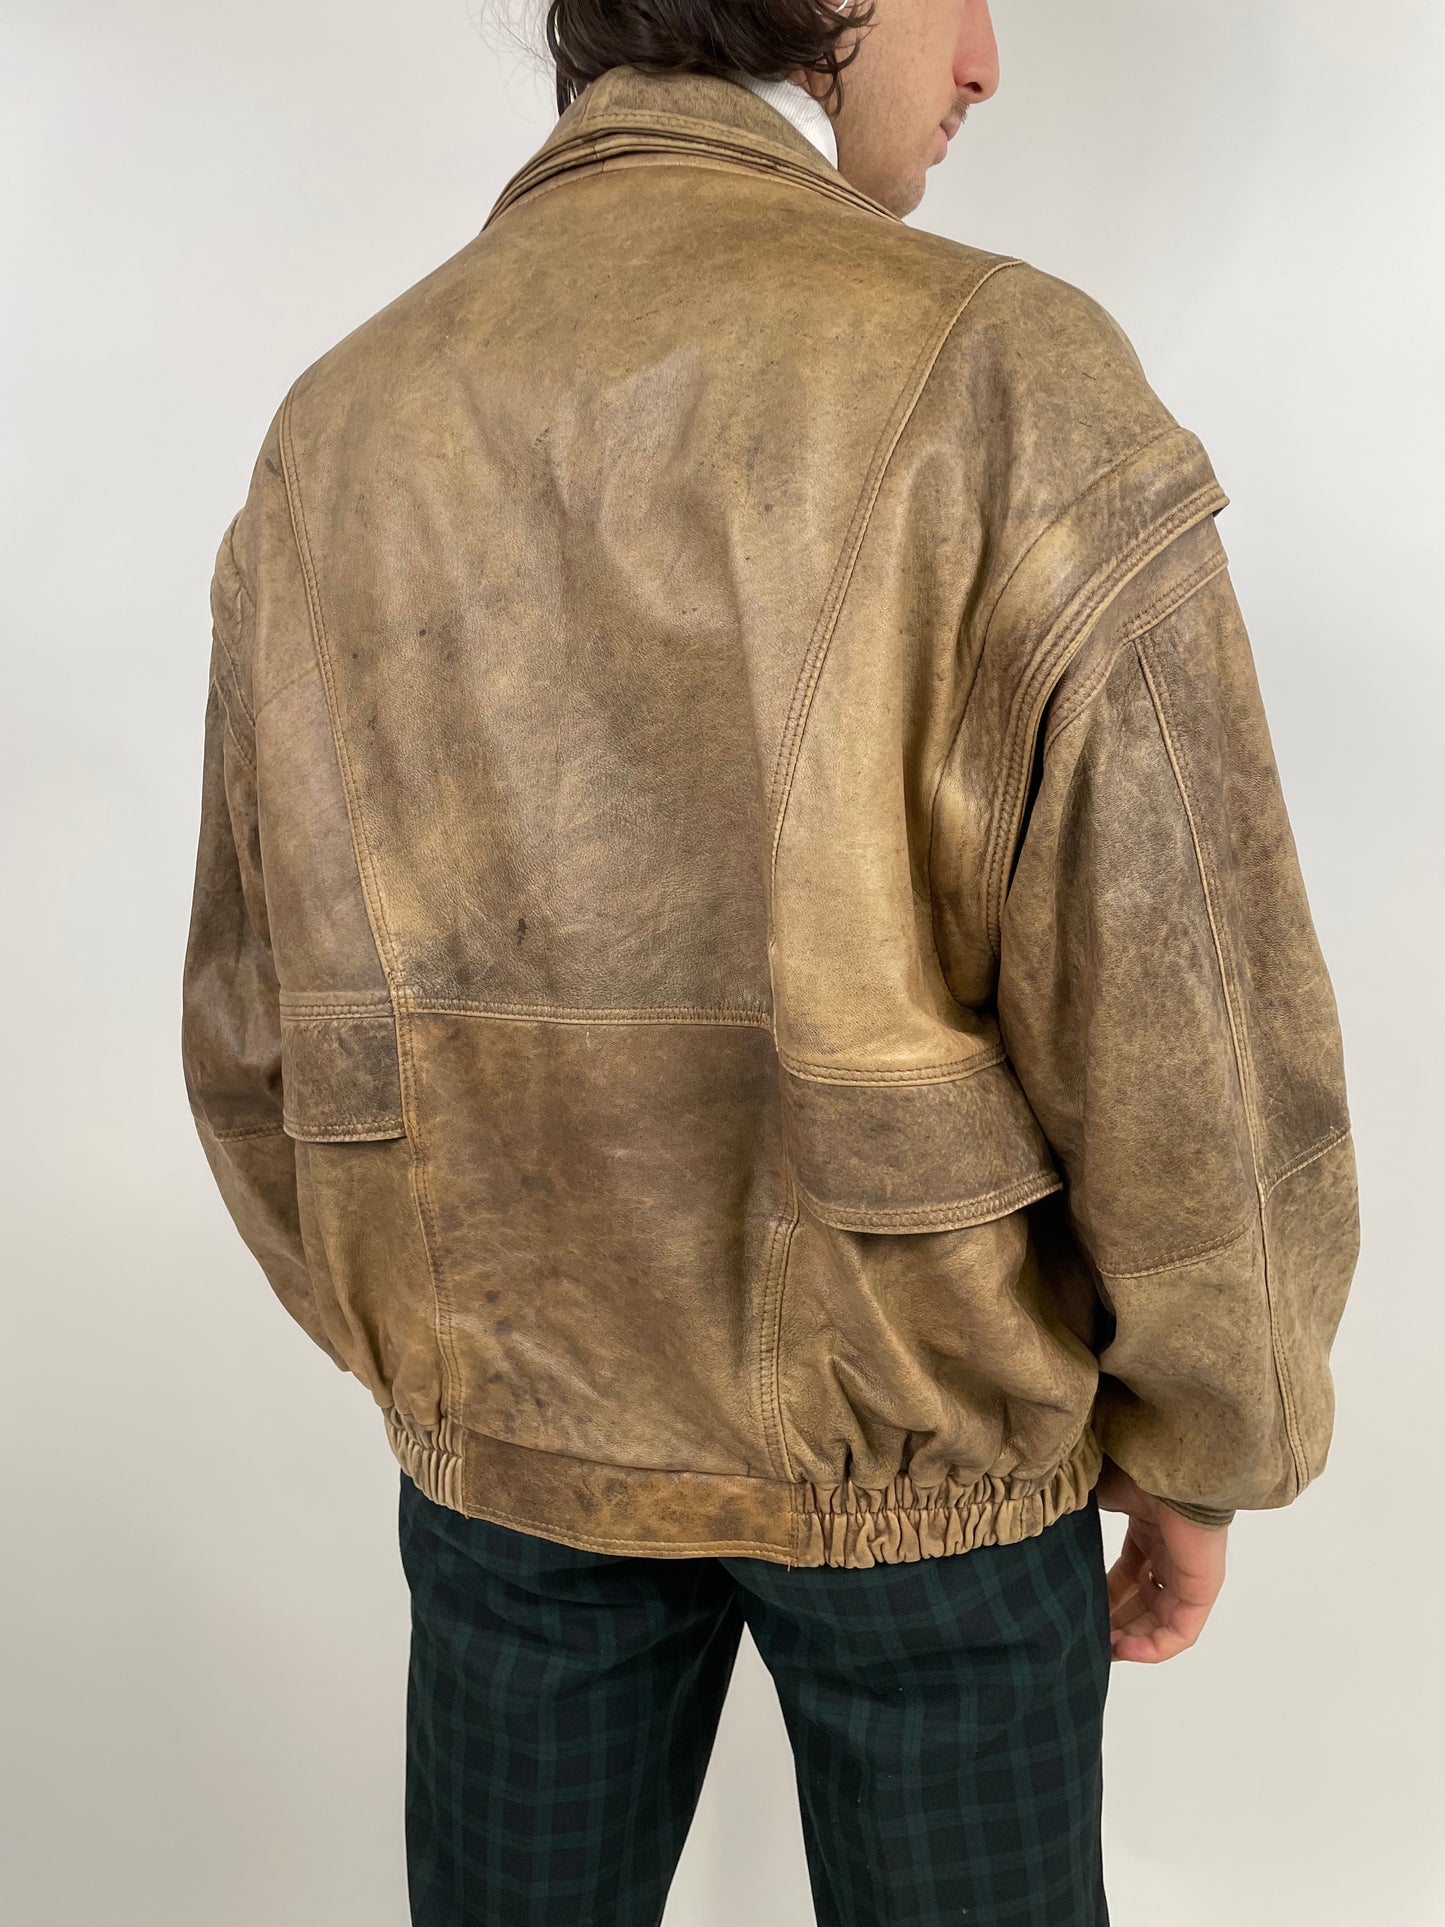 Jacket 1980s